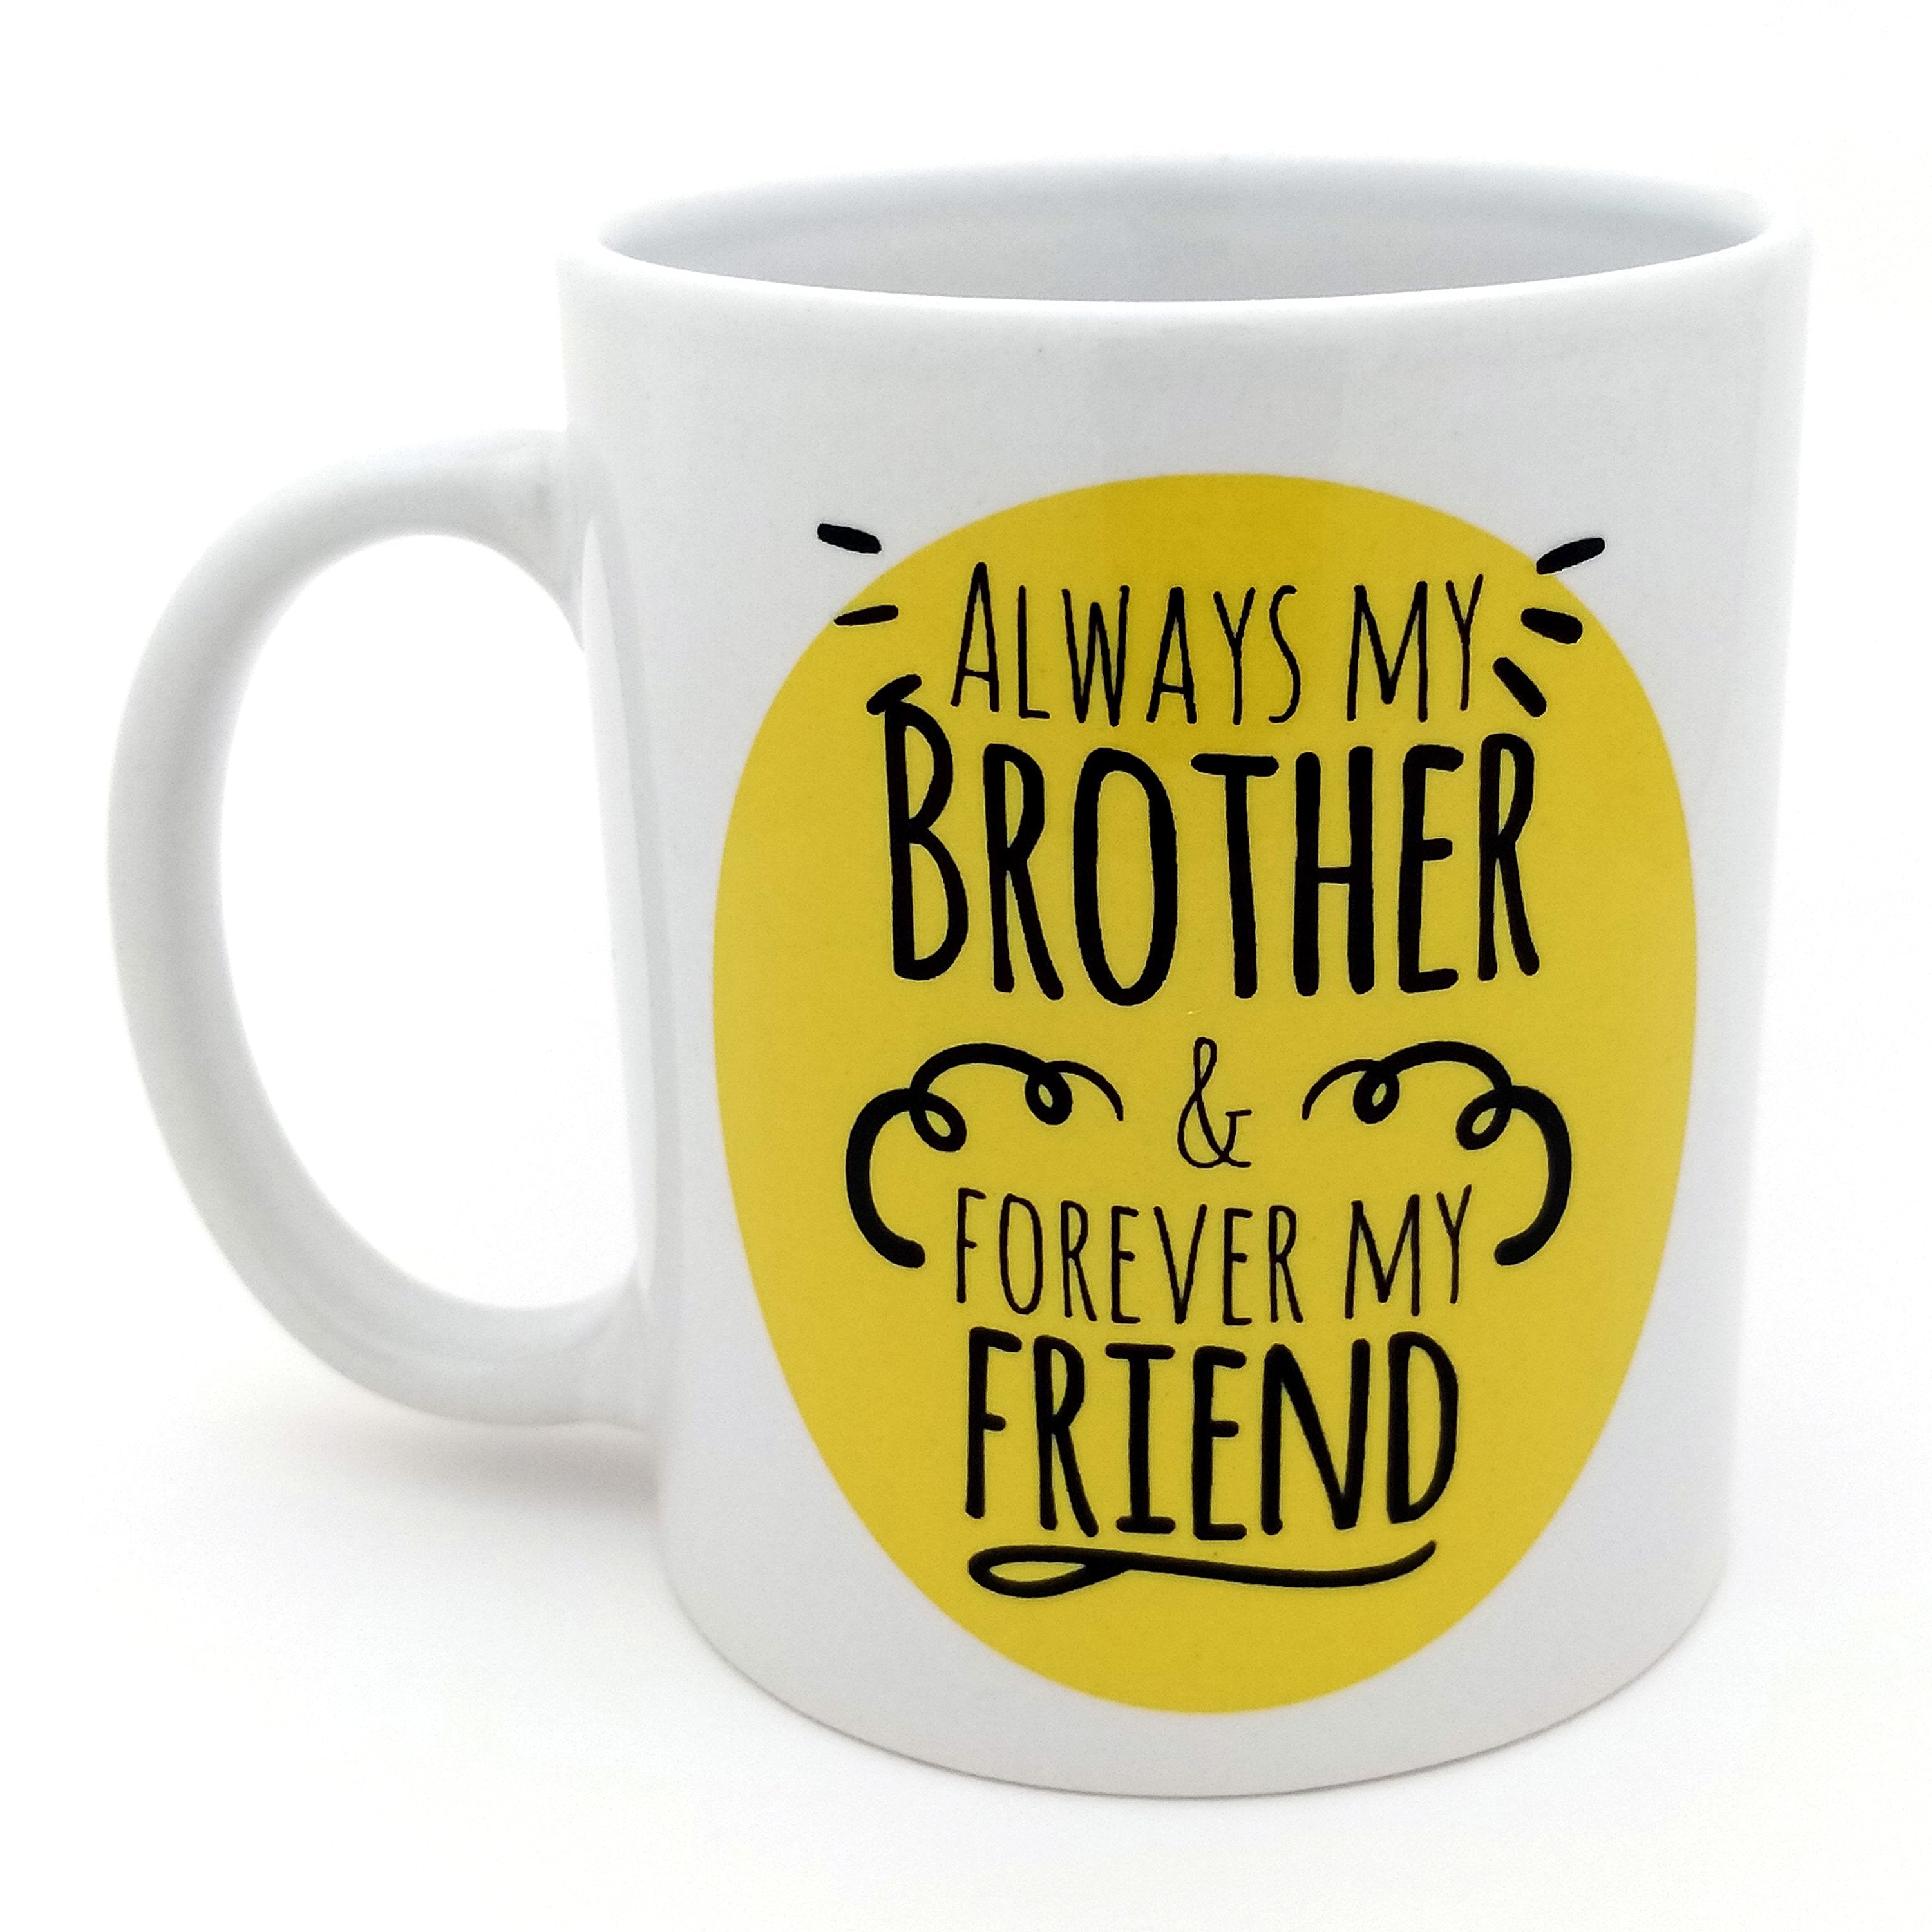 Always My brother Forever My Friend Ceramic Mug & Card, 315ml